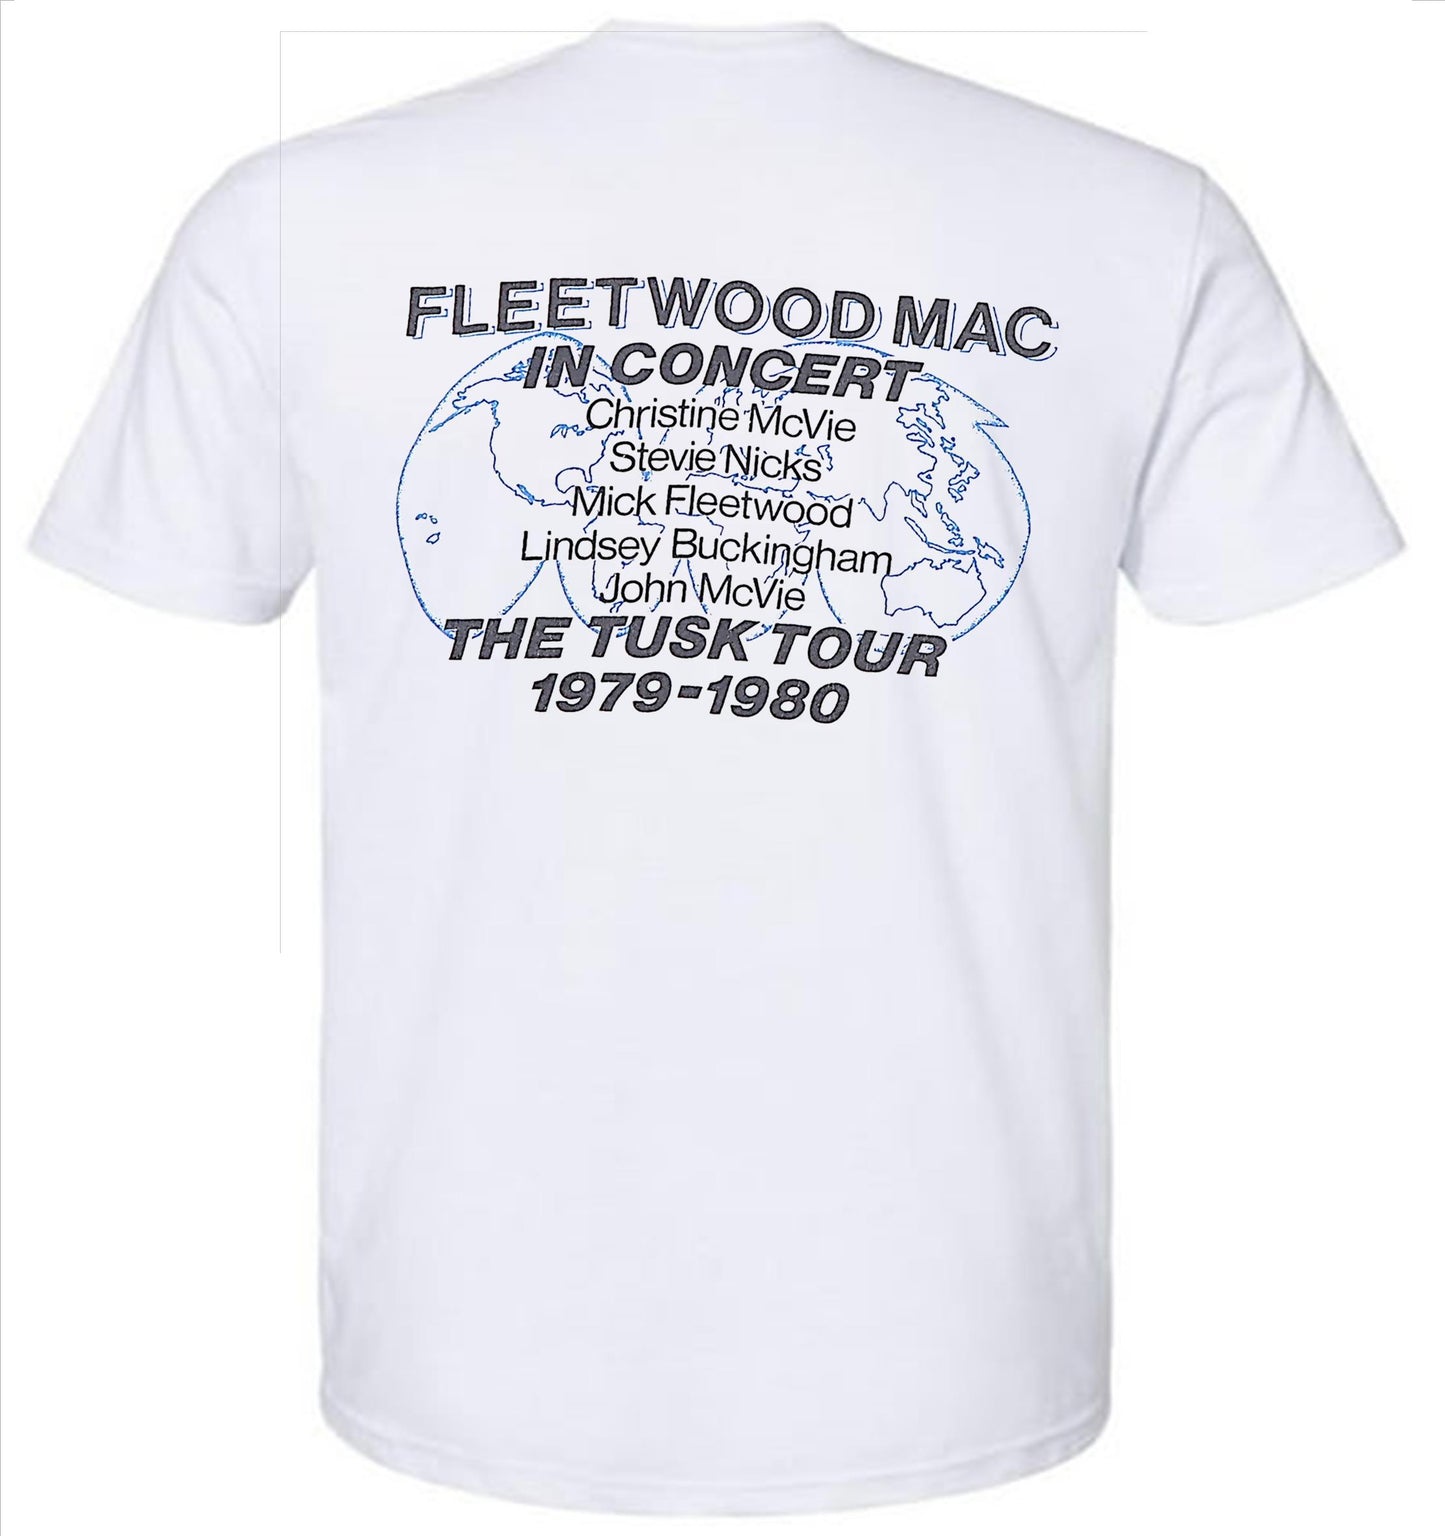 Fleetwood Mac Tusk Tour